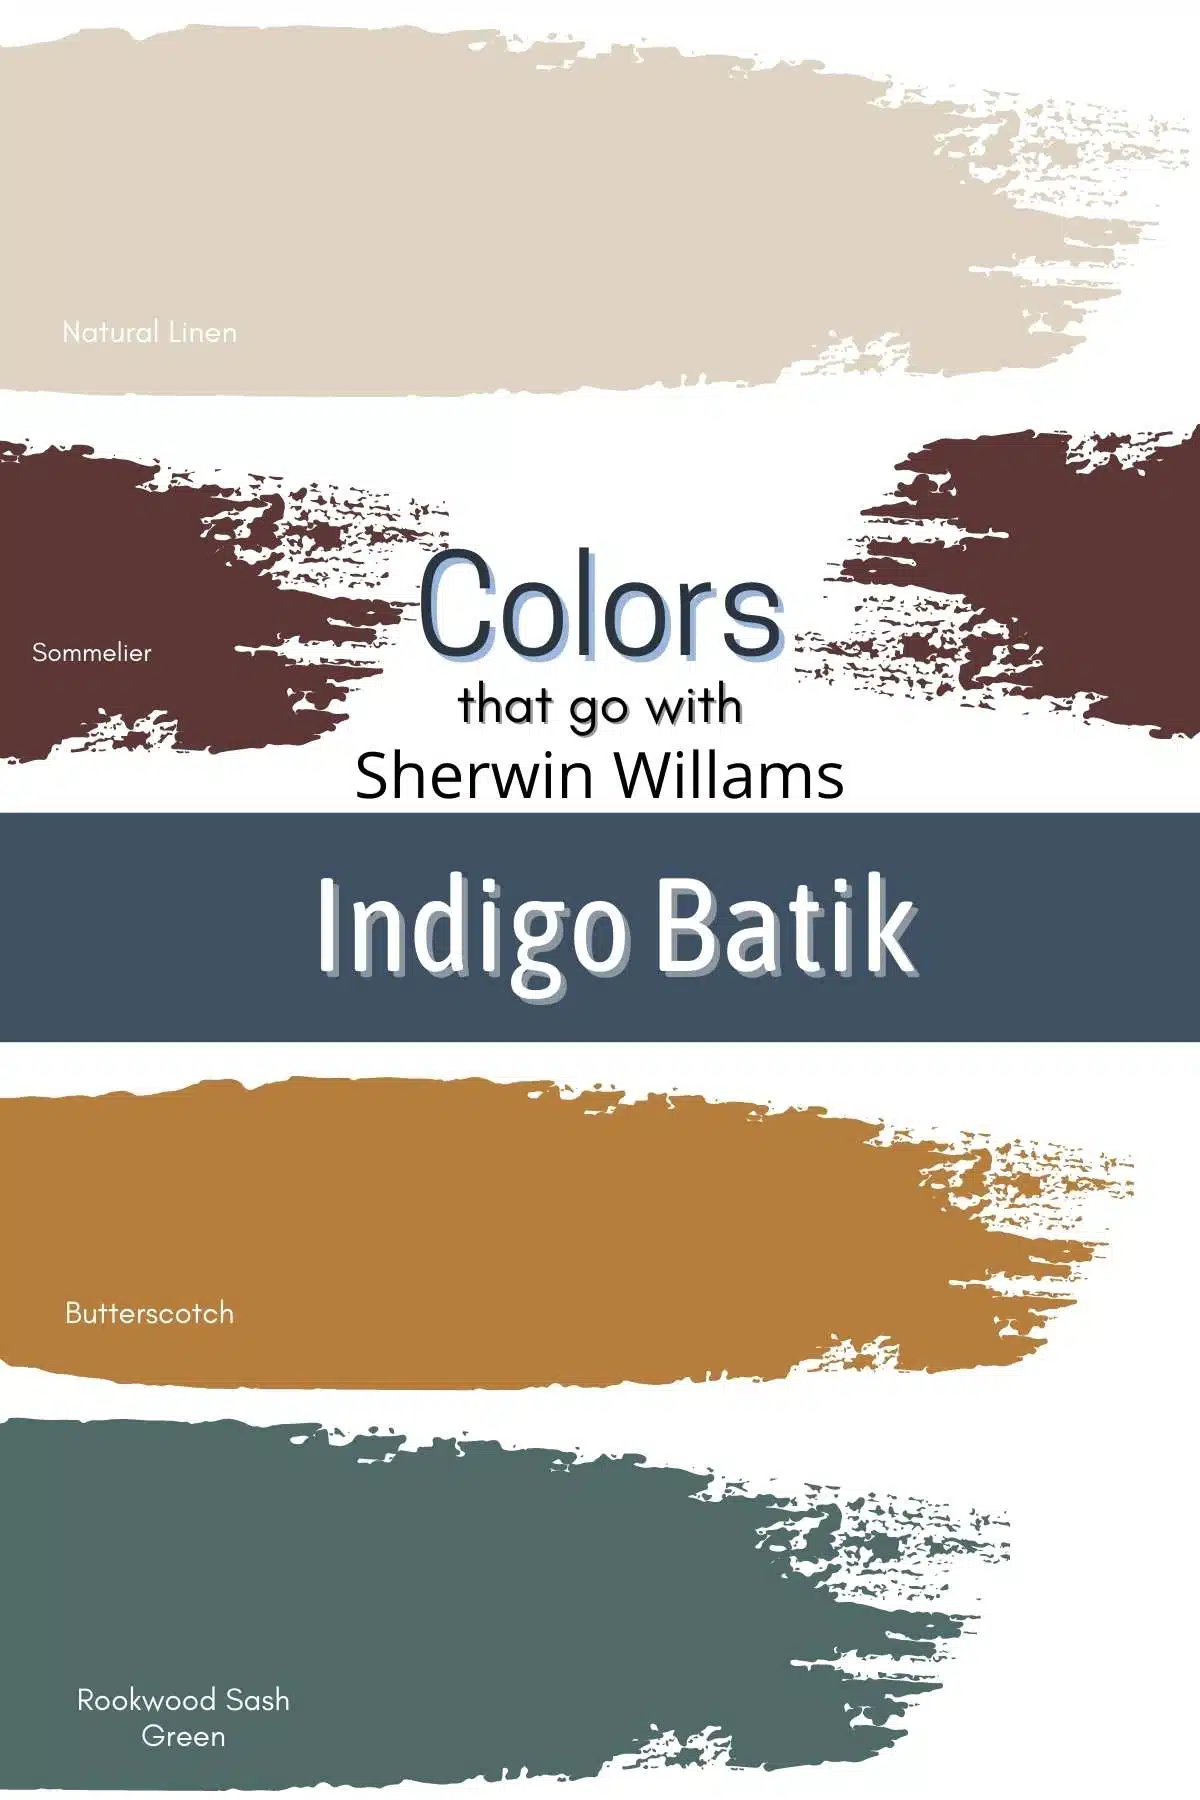 Colors that go with Sherwin Williams Indigo Batik.